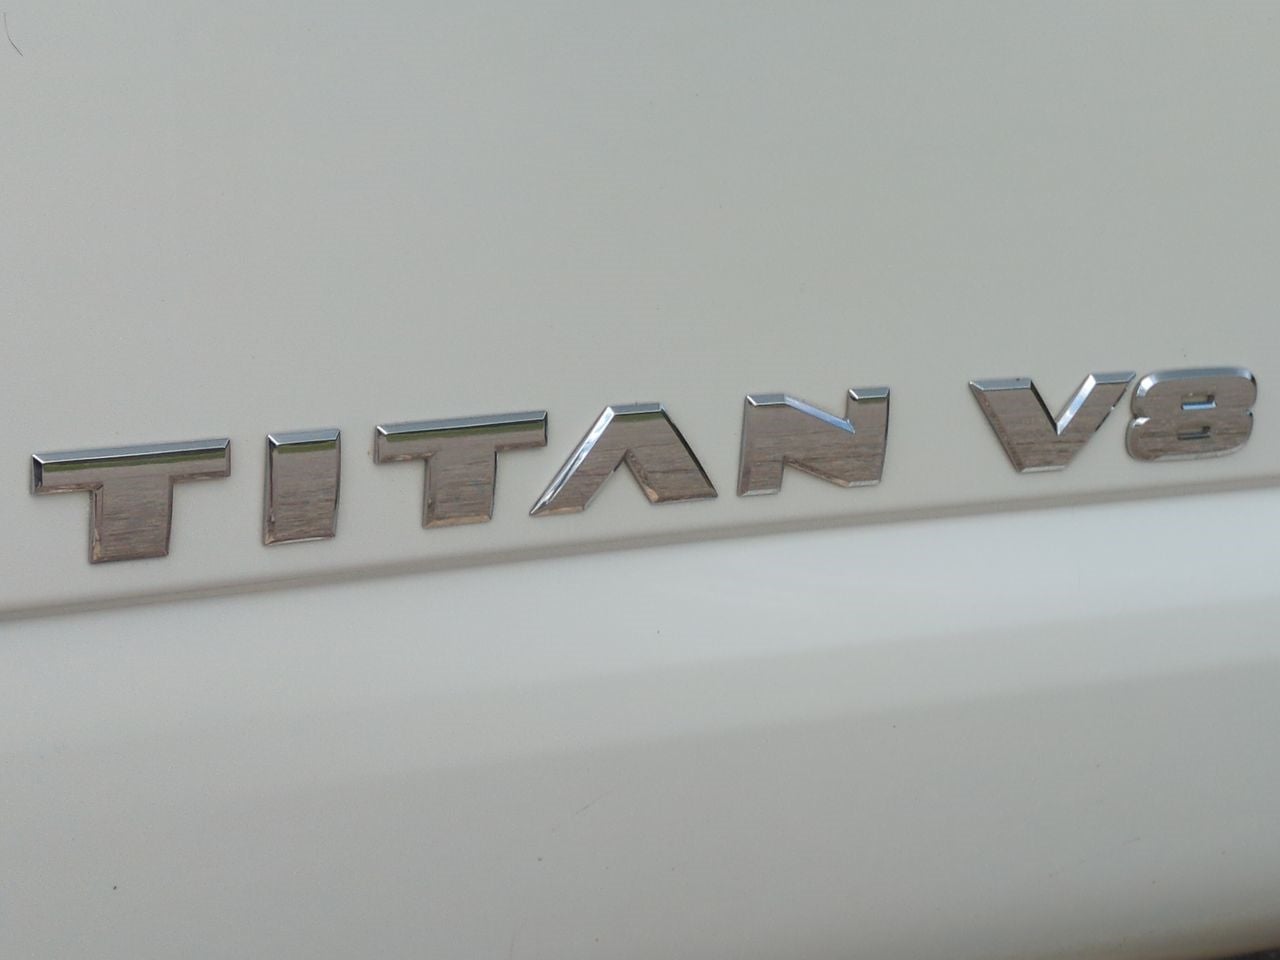 2018 Nissan TITAN PRO-4X in Columbus, MI - Mark Wahlberg Automotive Group